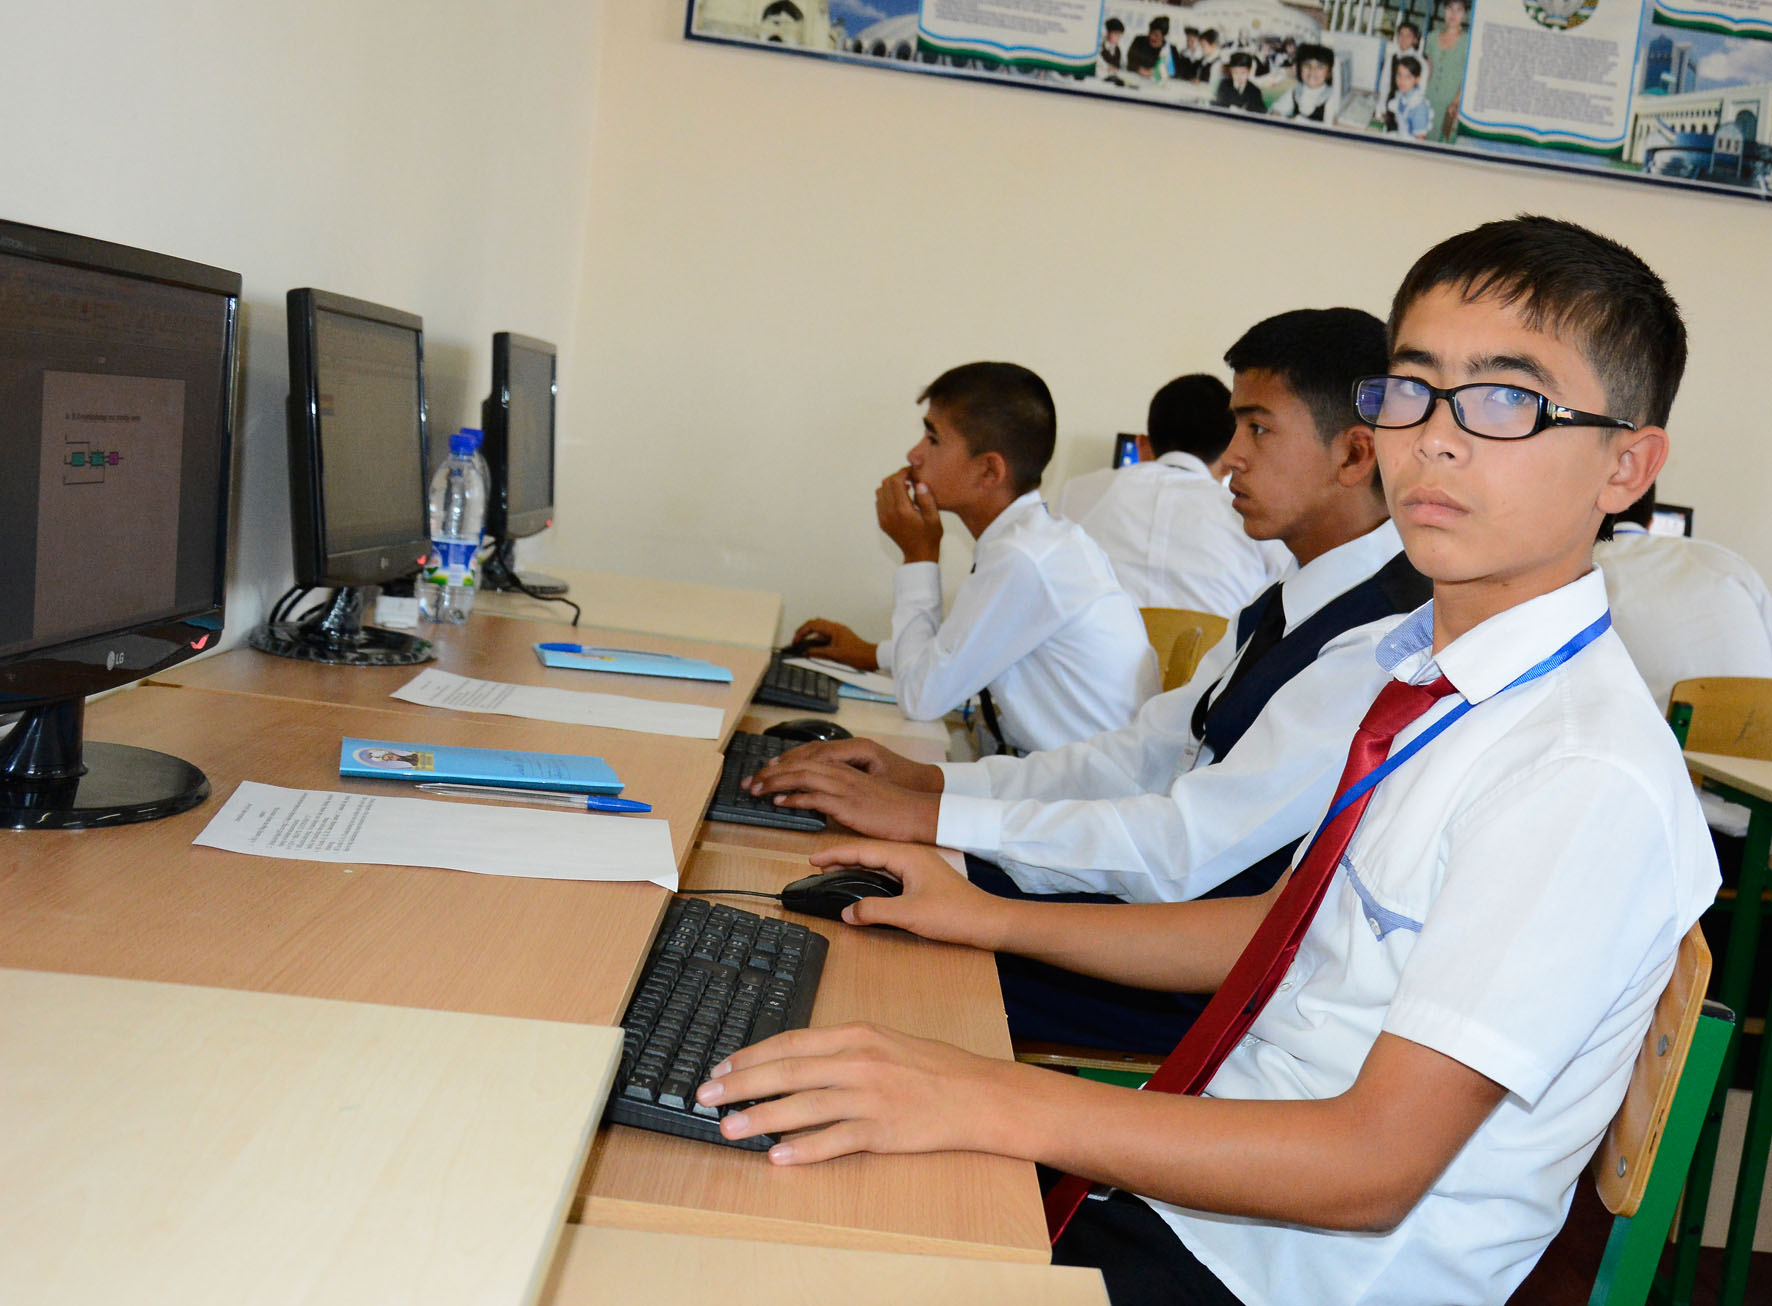 Apro uz test ishlash. Студенты Узбекистана. Компьютер Узбекистан. Таълим технологиялари. Узбекистан в компьютерных.